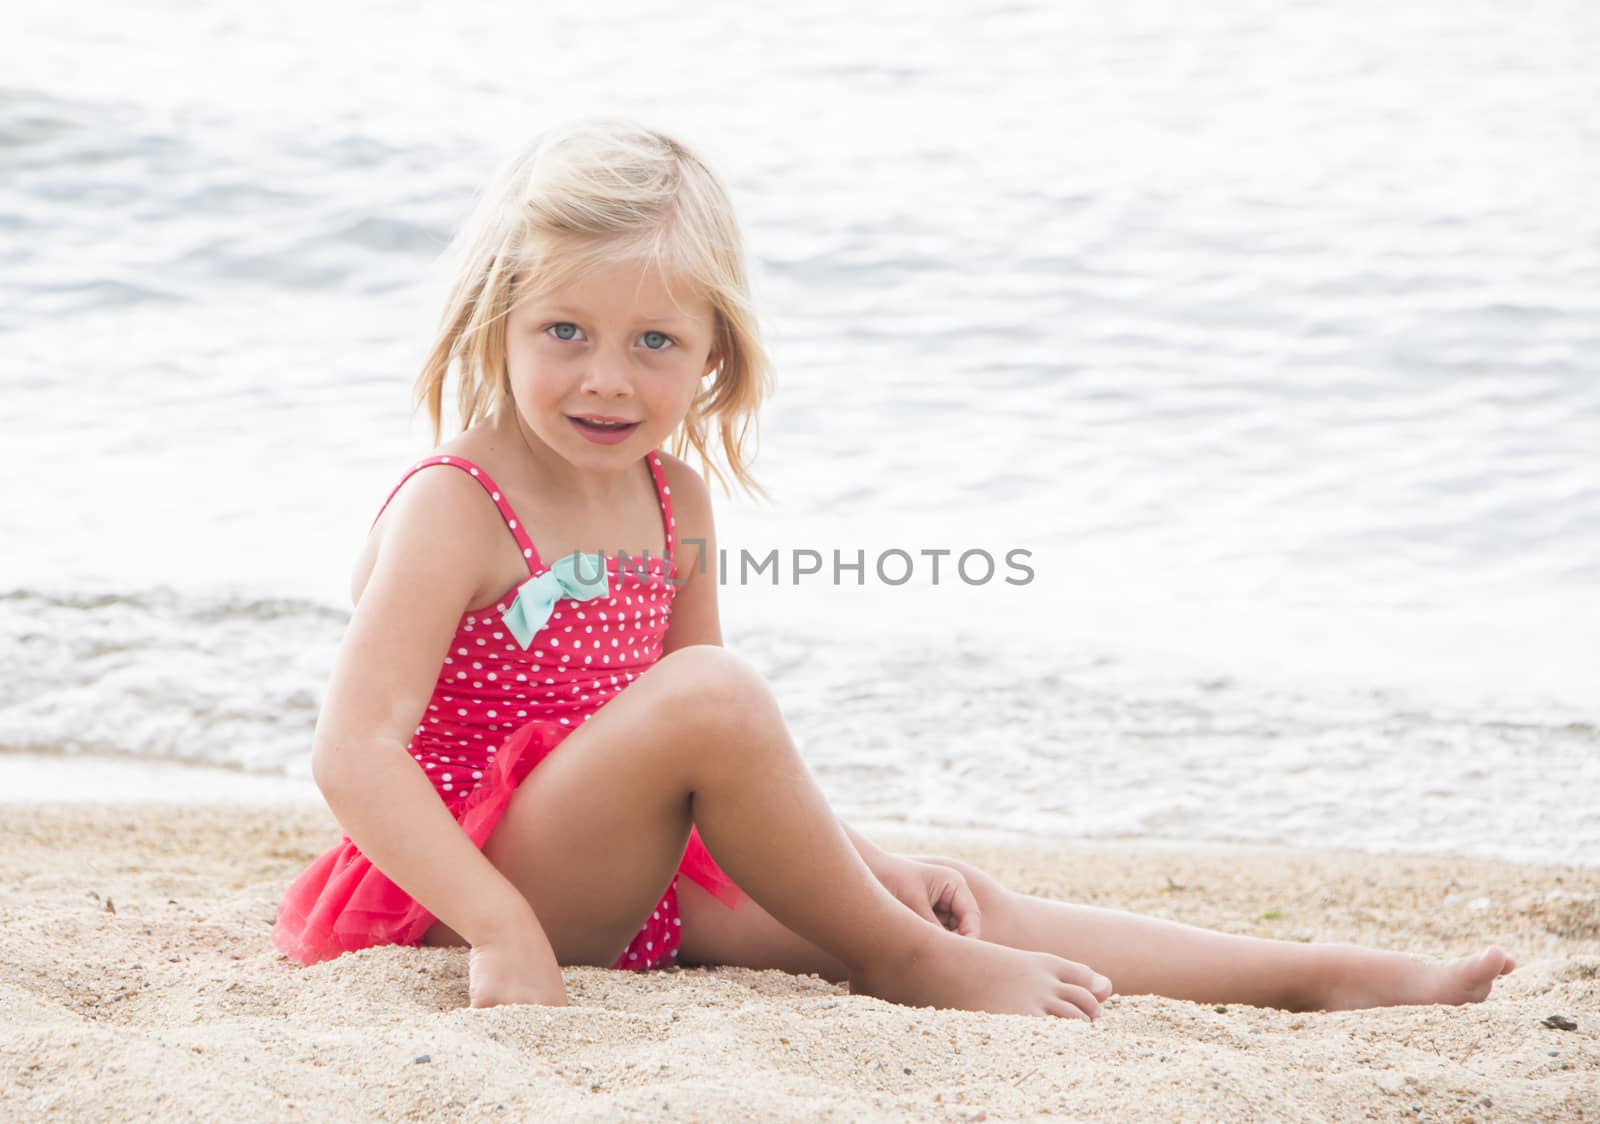 Cute Little Girl Sunbathing on the Beach